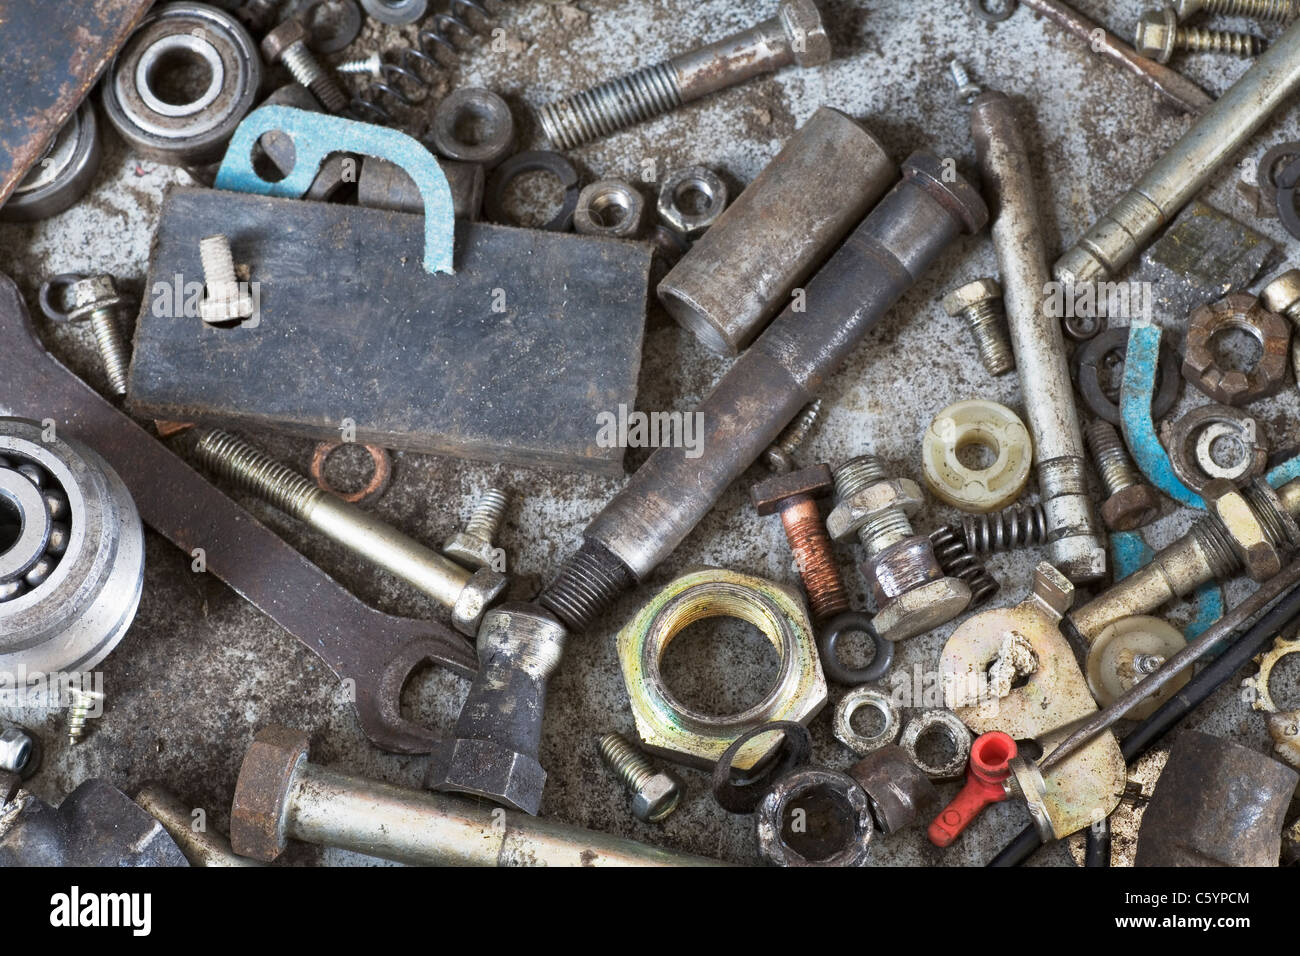 Russia, Voronezh, metal tools Stock Photo